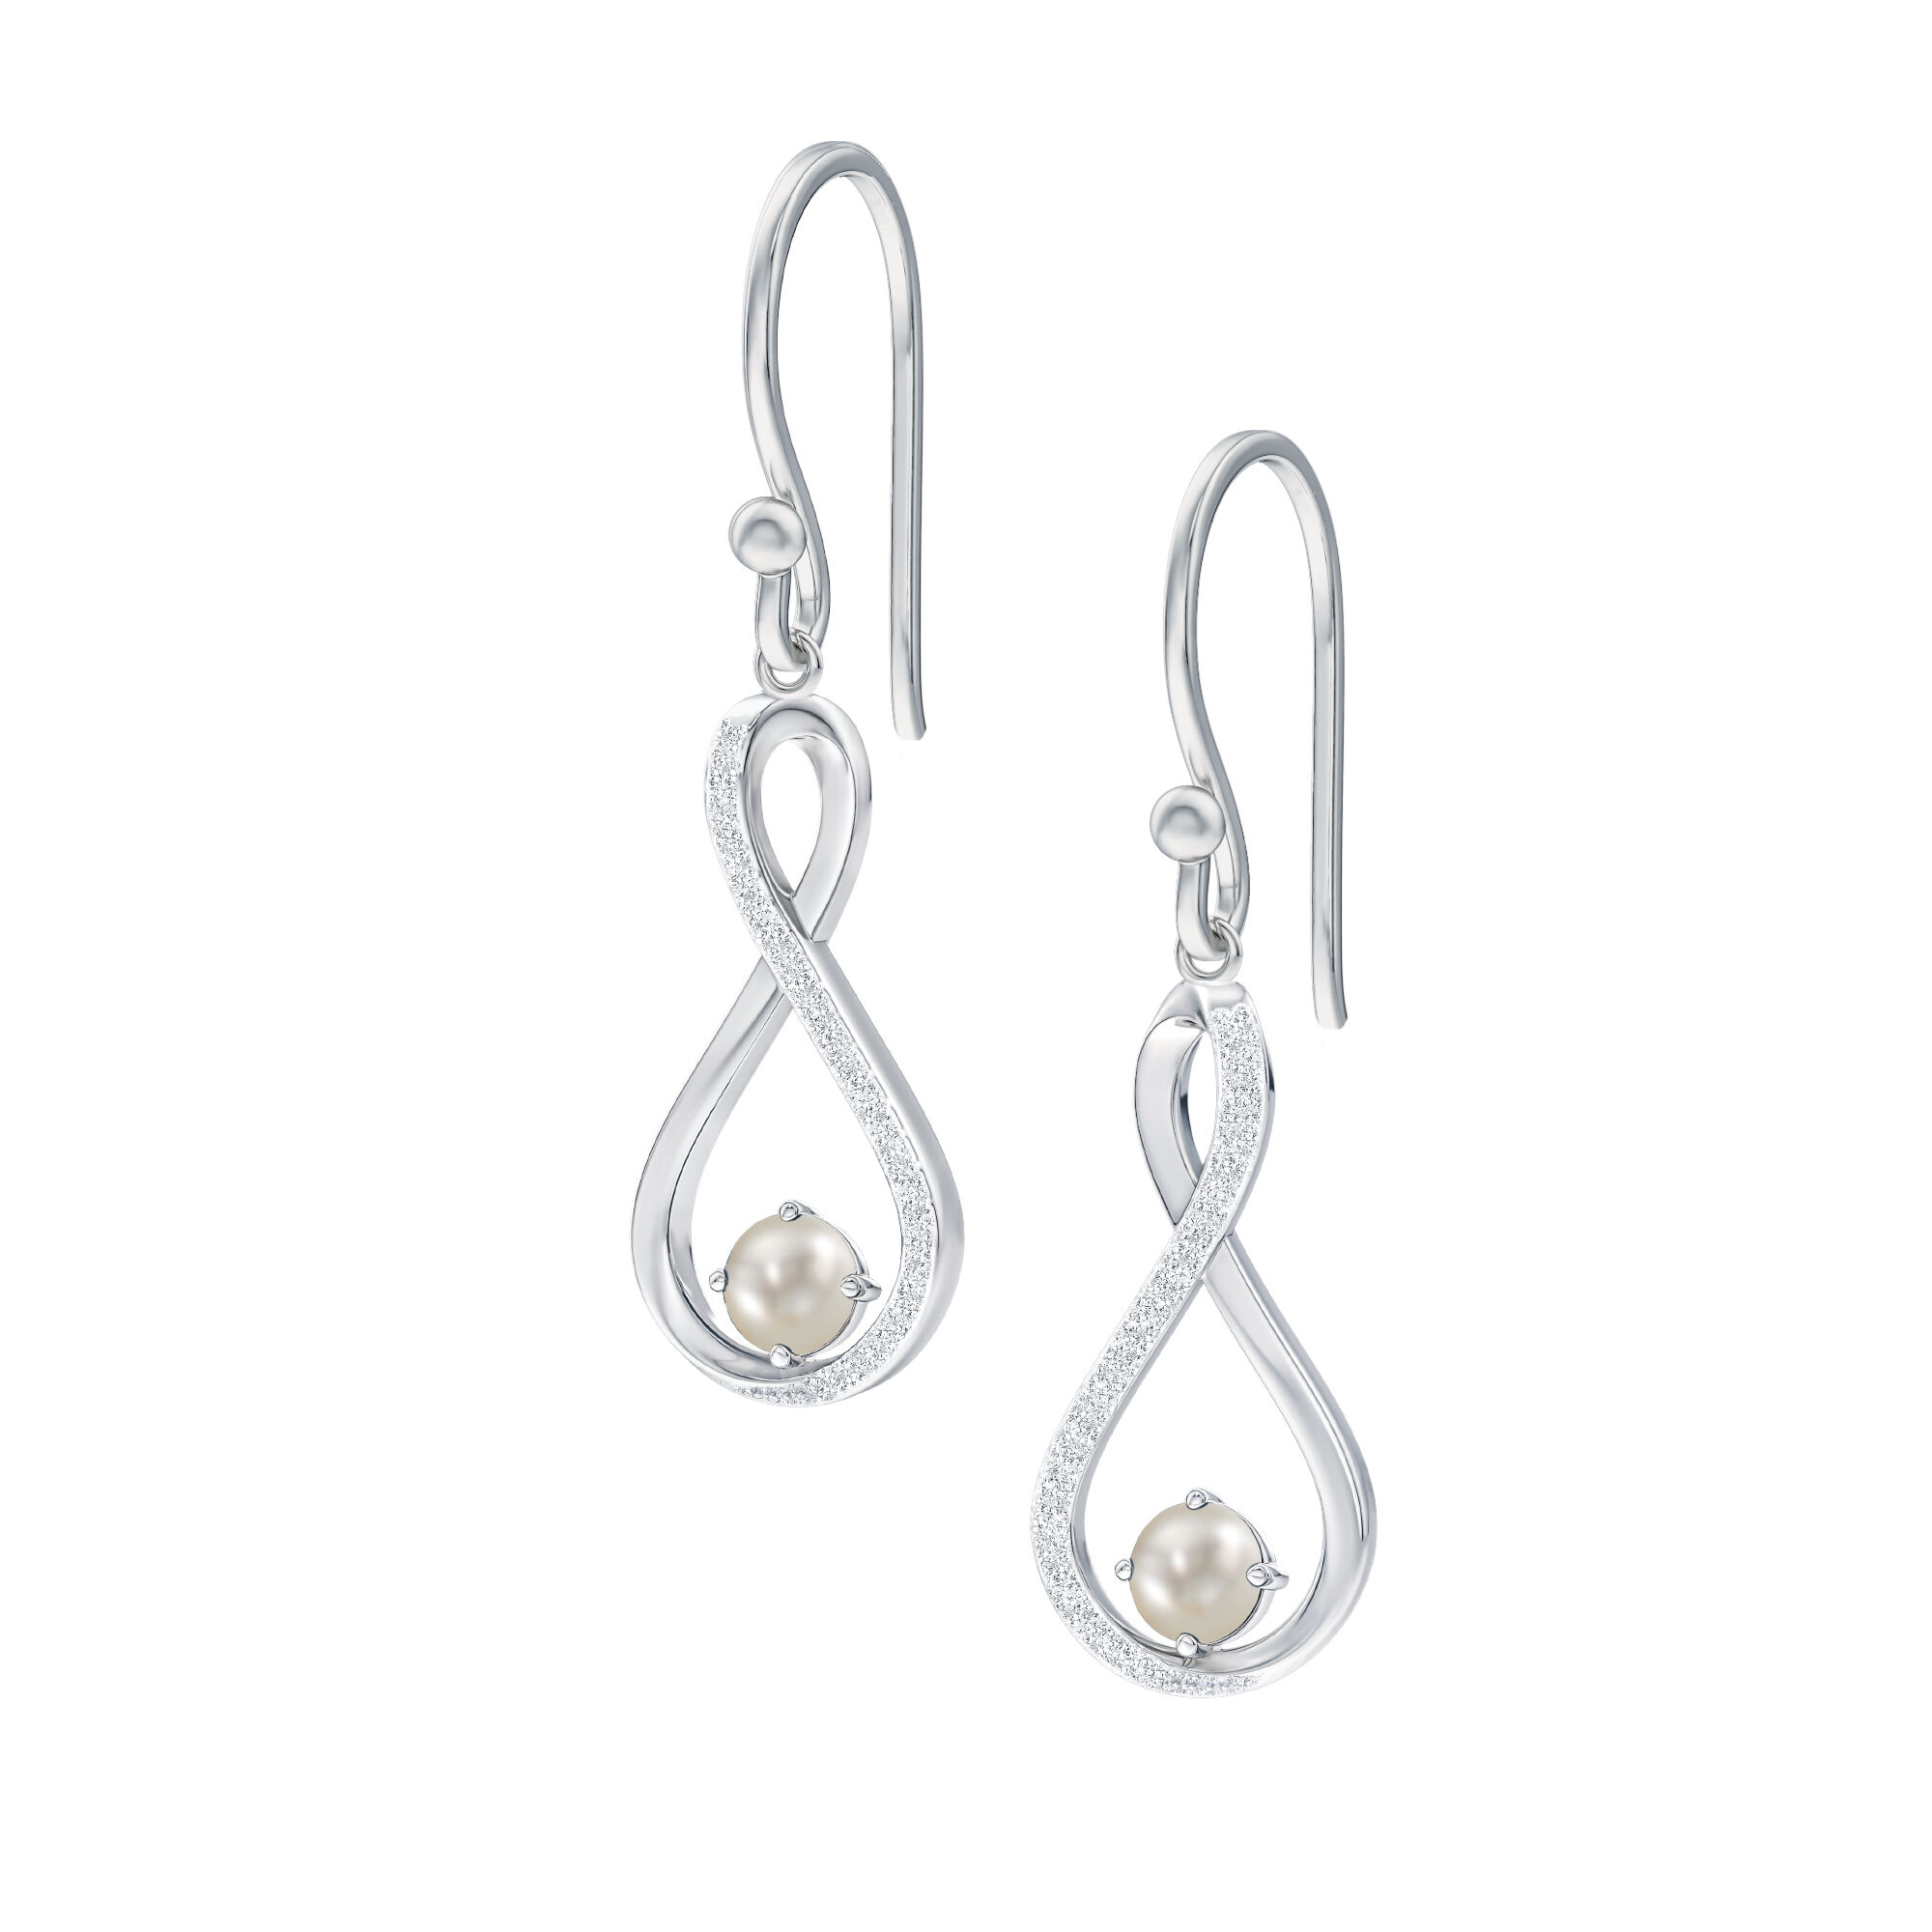 Birthstone and Diamond Earrings 5200 0056 f june